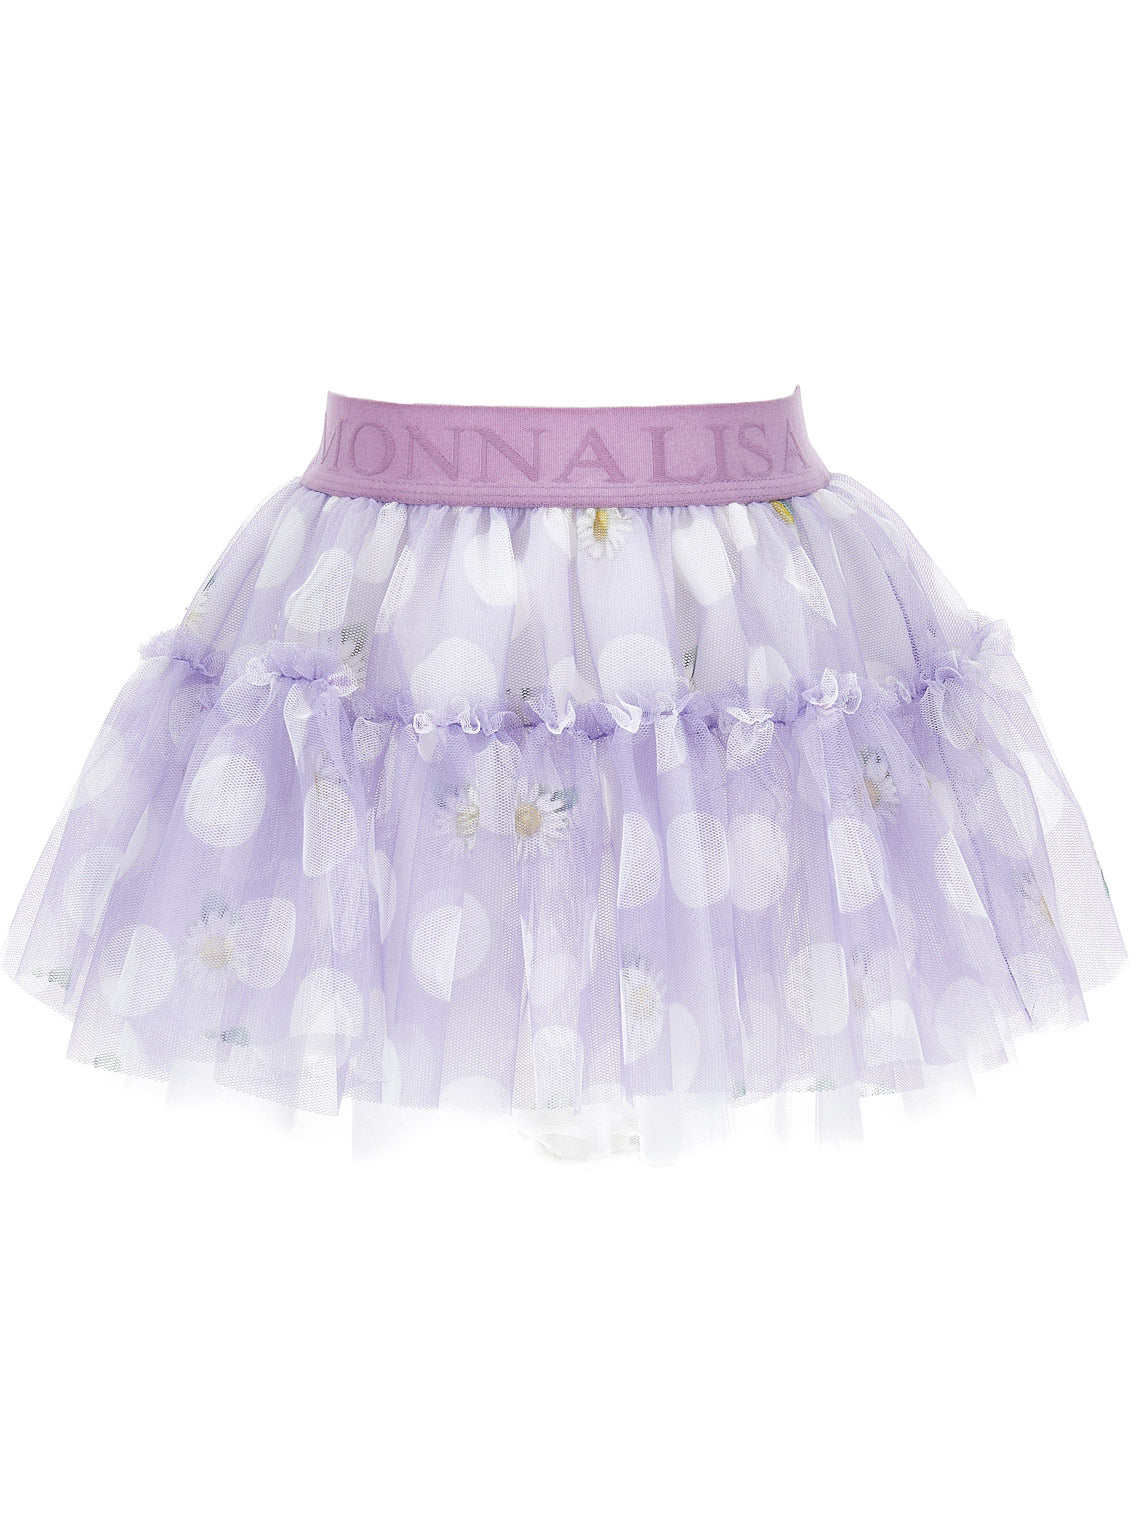 Monnalisa Tulle skirt with polka dots and daisies